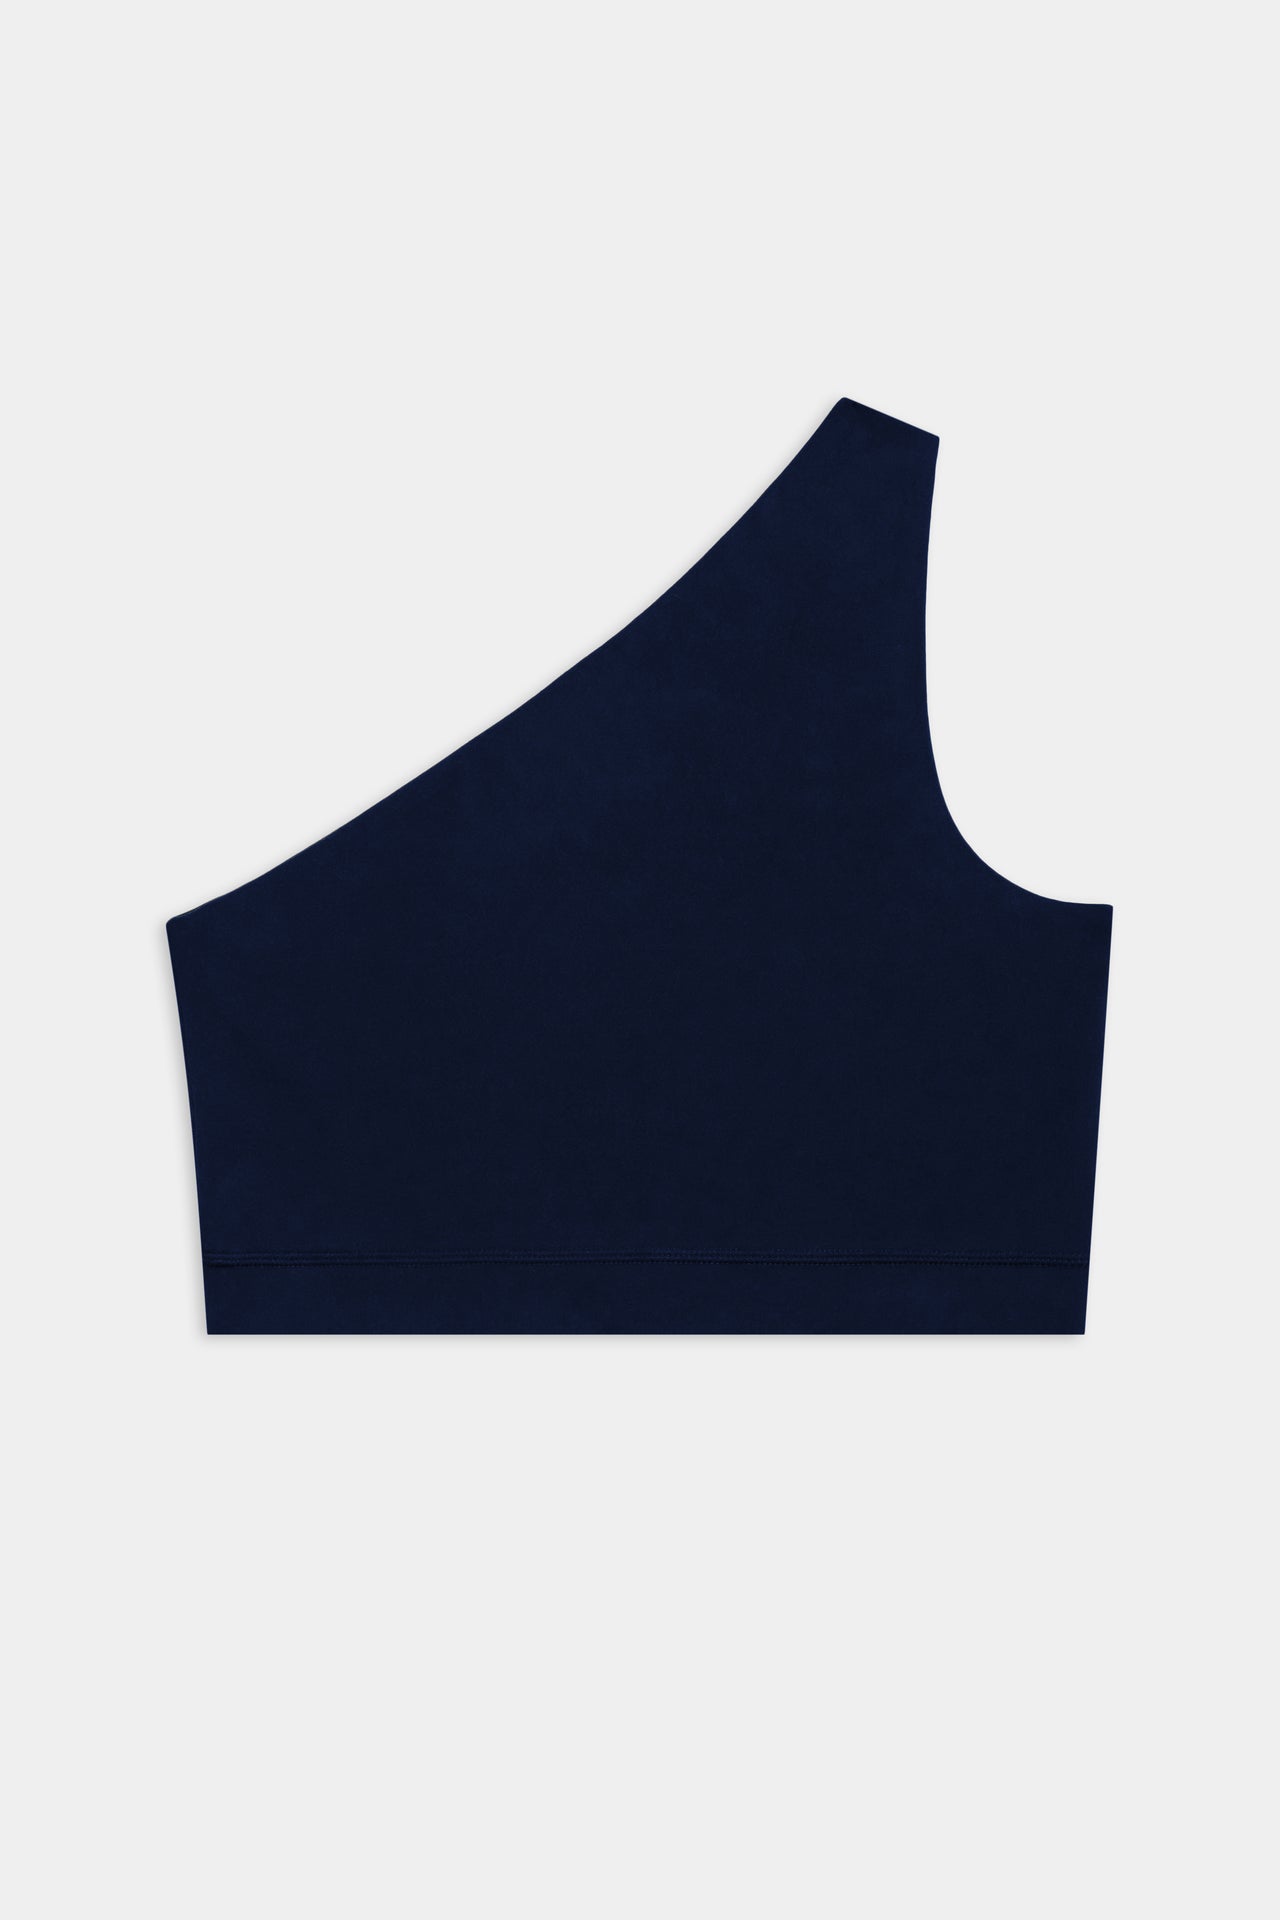 Flat view of a dark blue one shoulder bra 